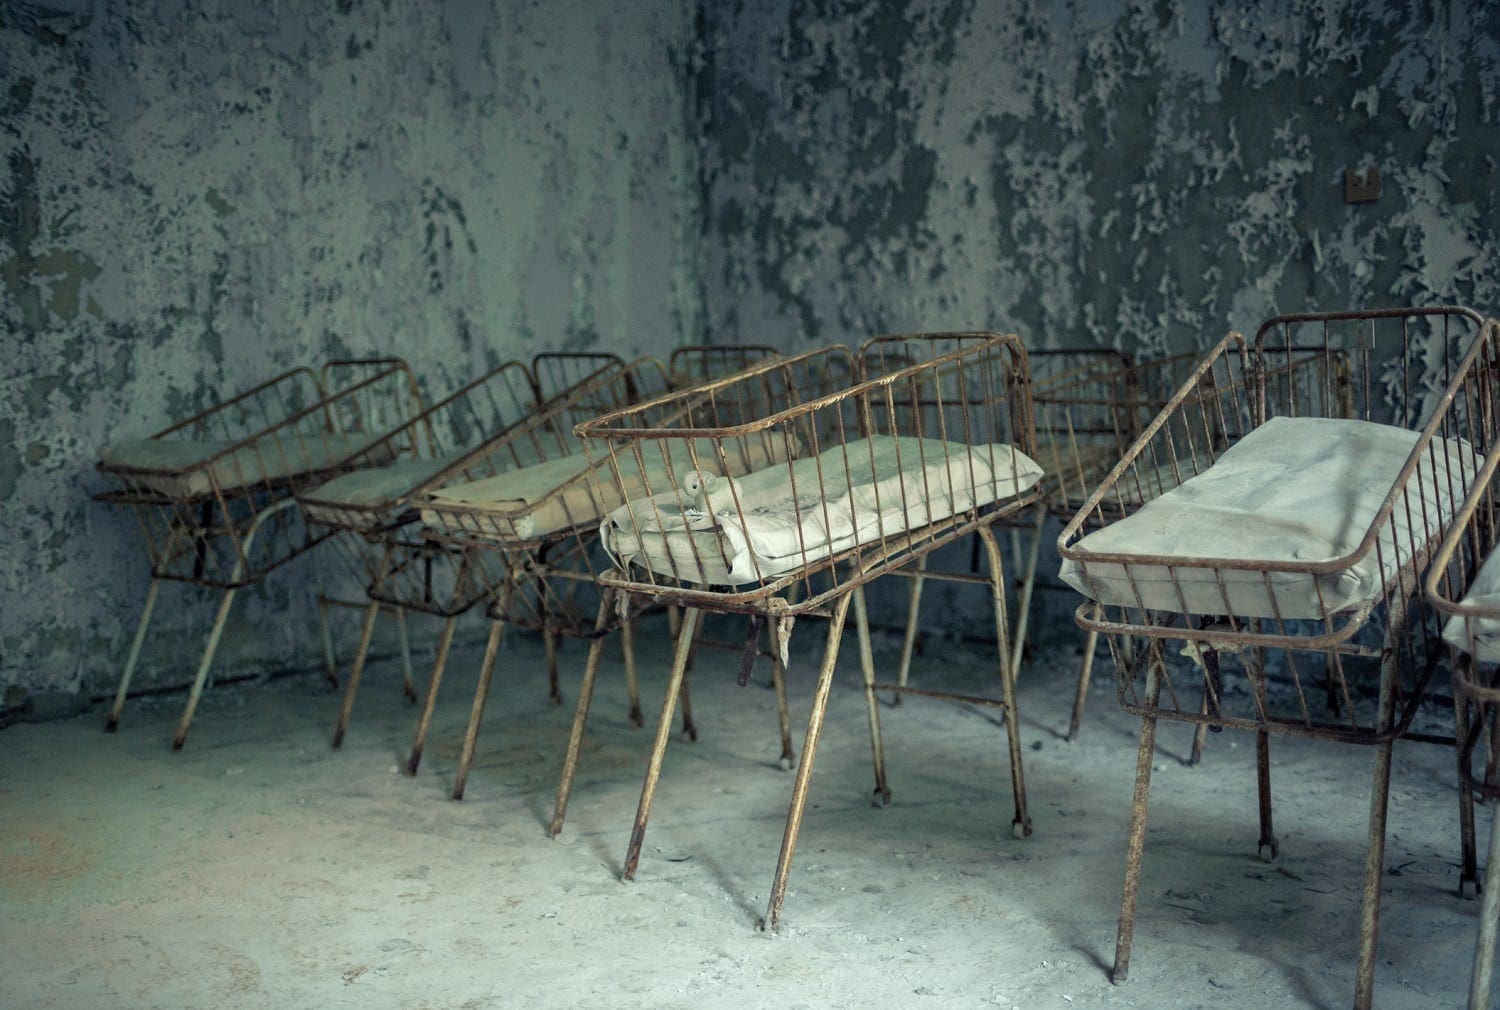 Abandoned Infants' Ward with rusty Bassinets: ID 110406990 © Daria Kochetova | Dreamstime.com